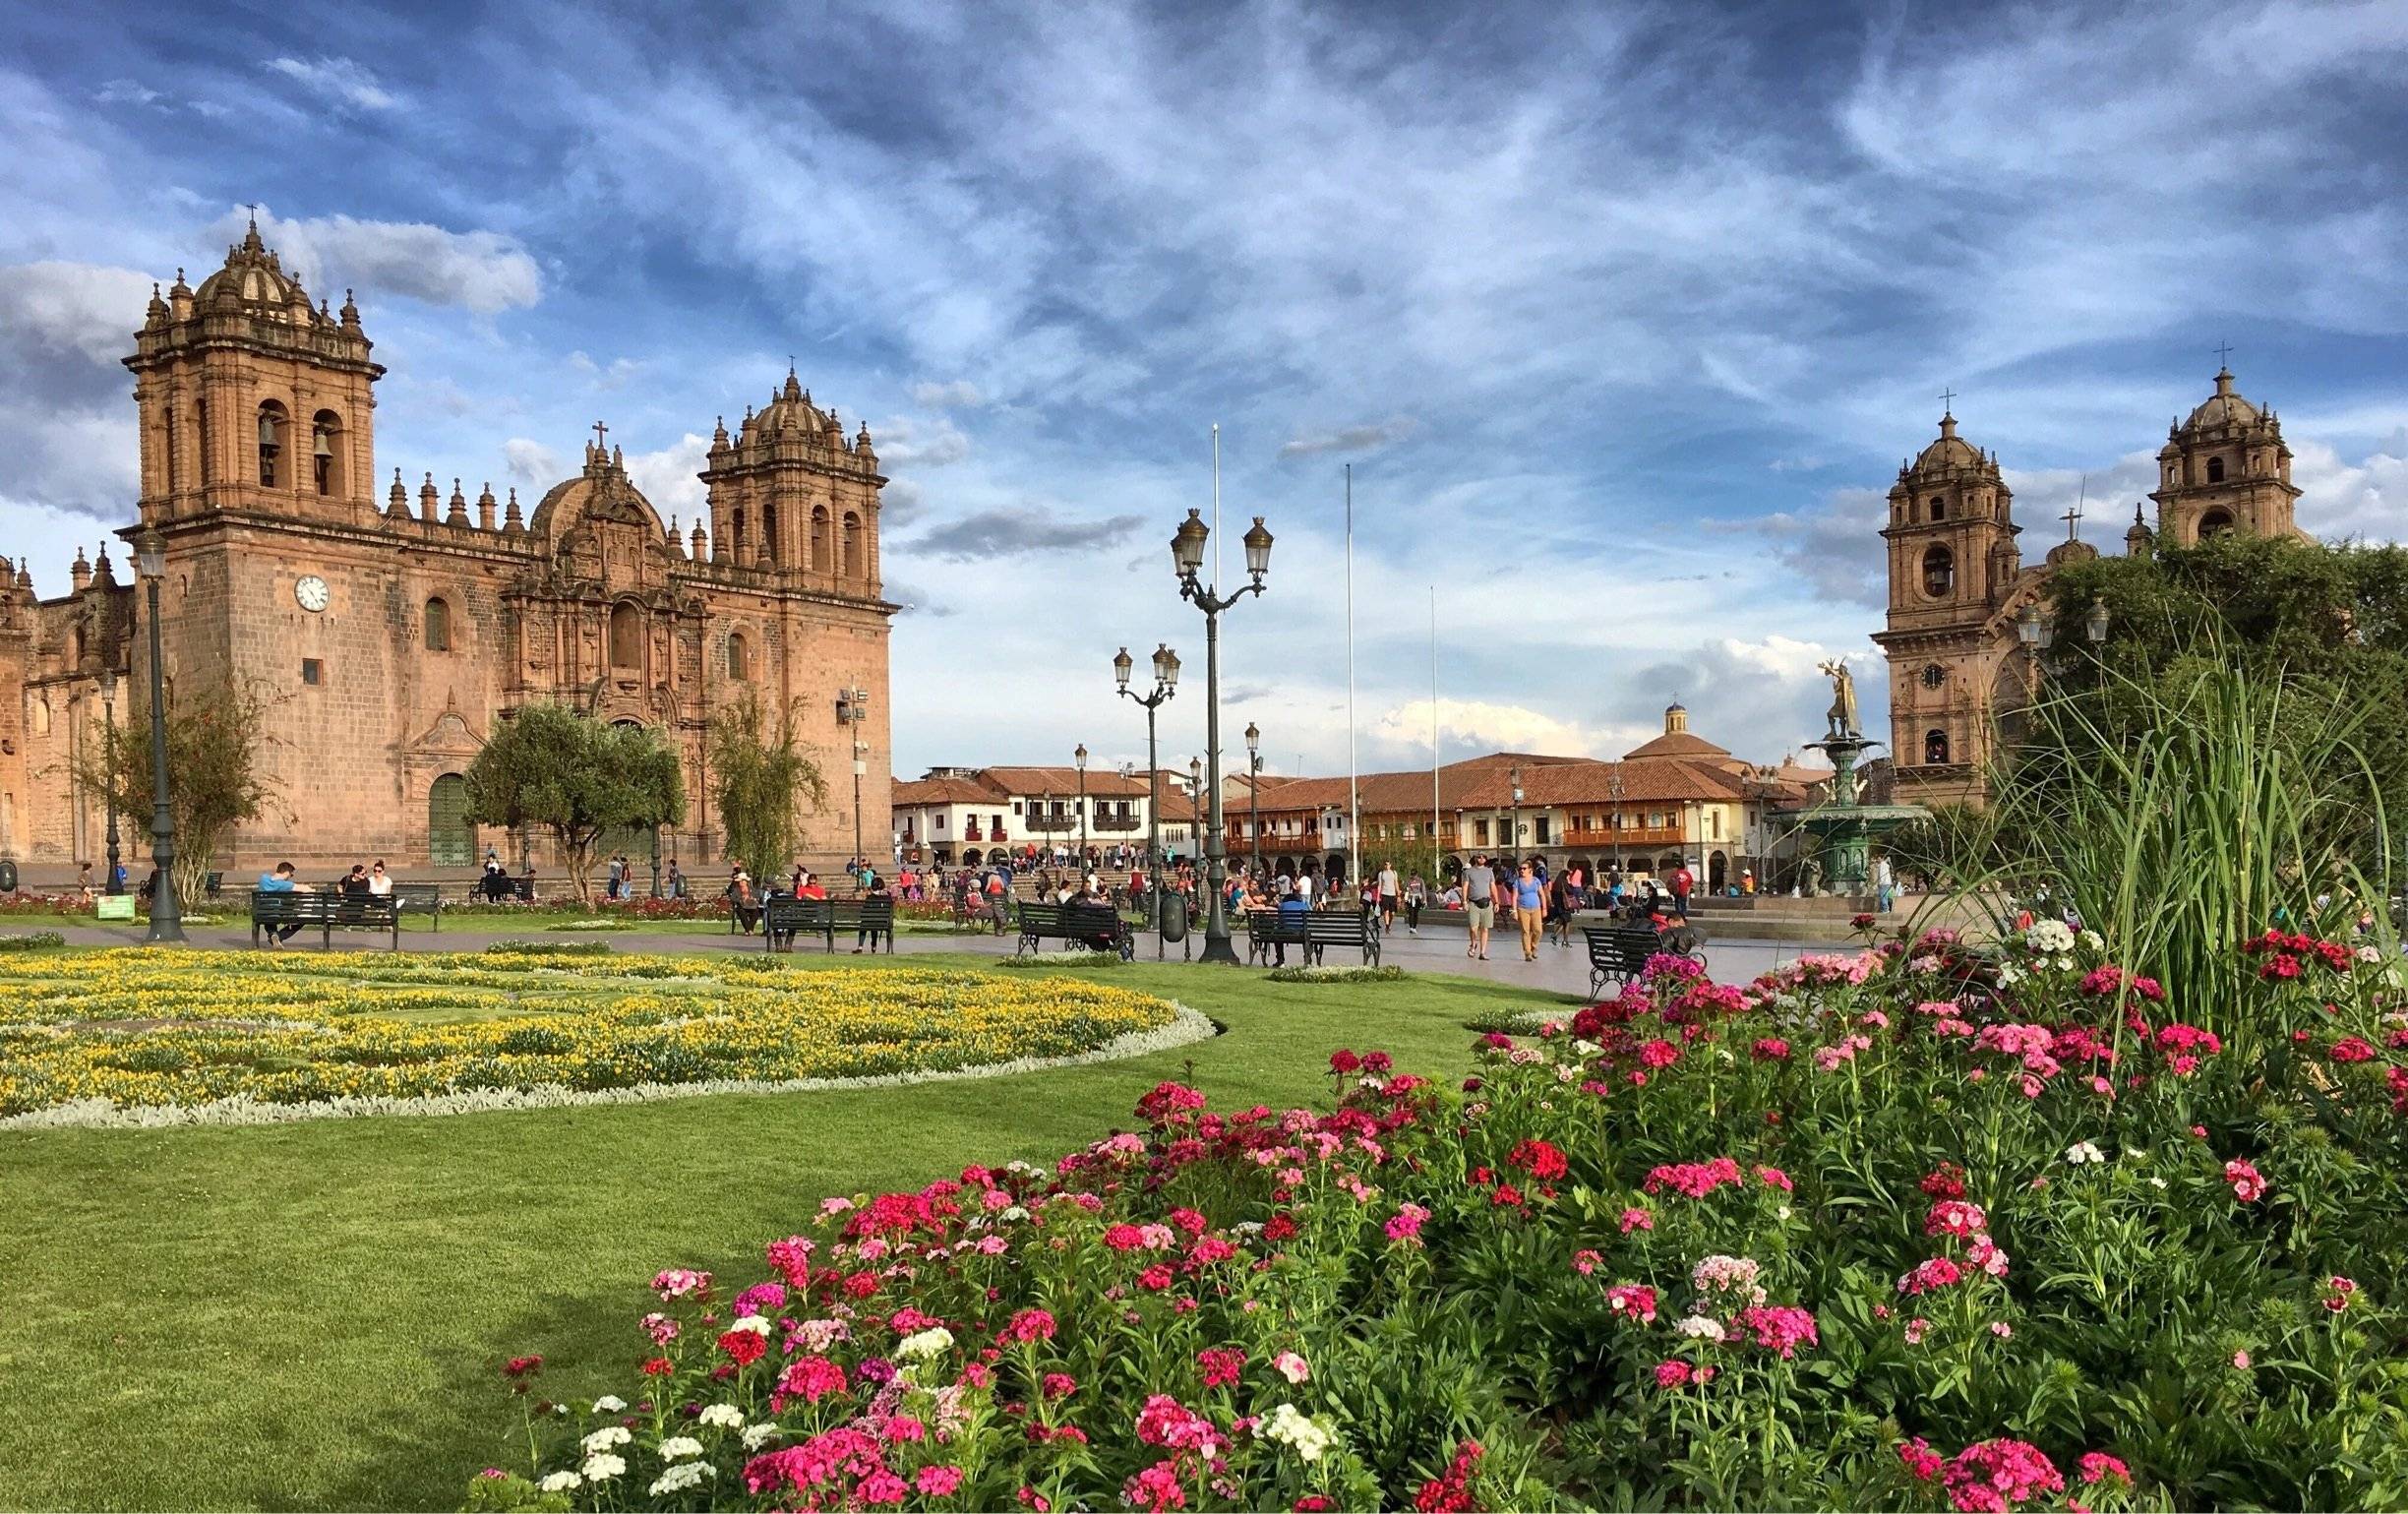 Giornata libera a Cusco